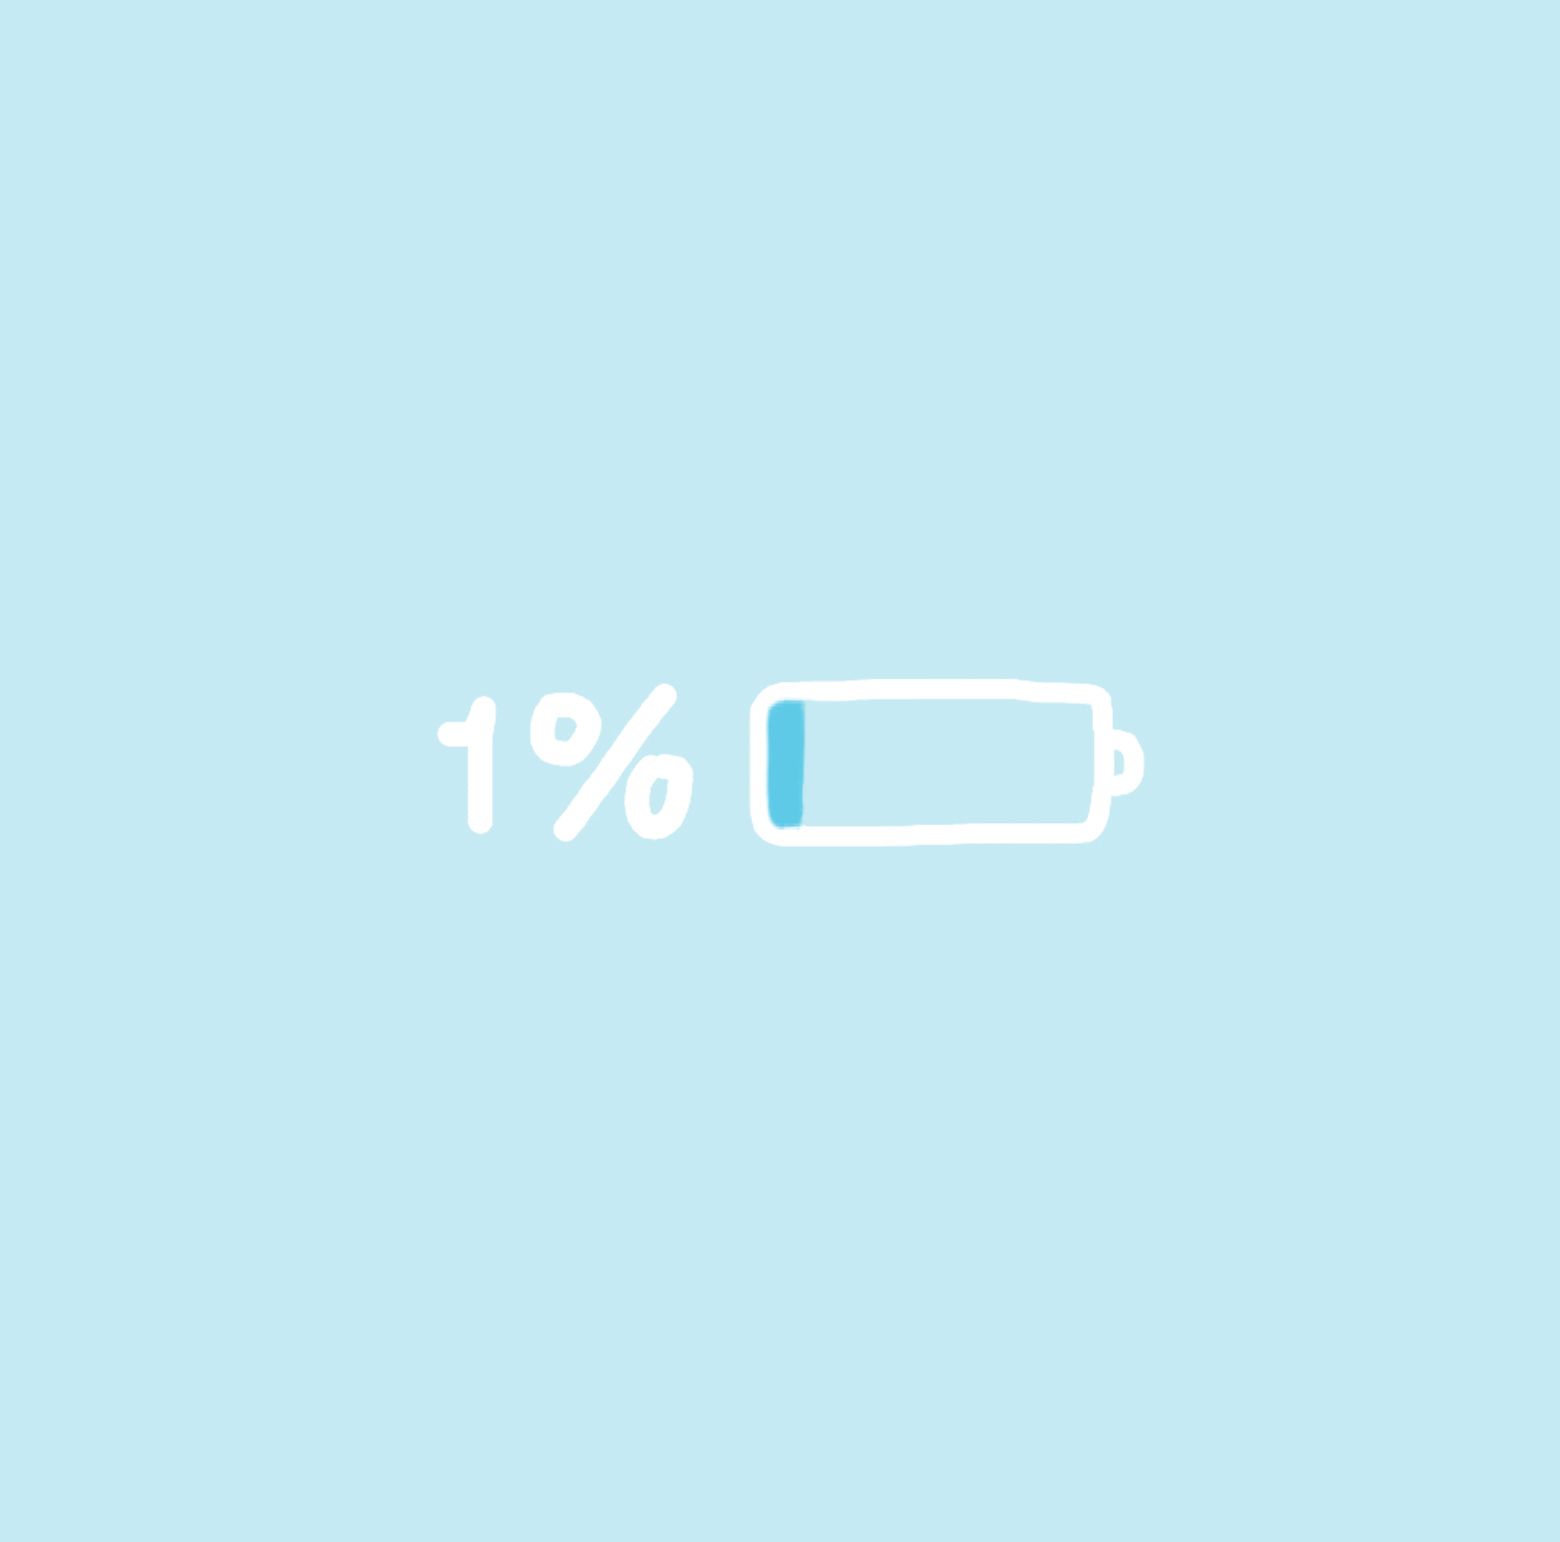 10% battery on a blue background - Pastel blue